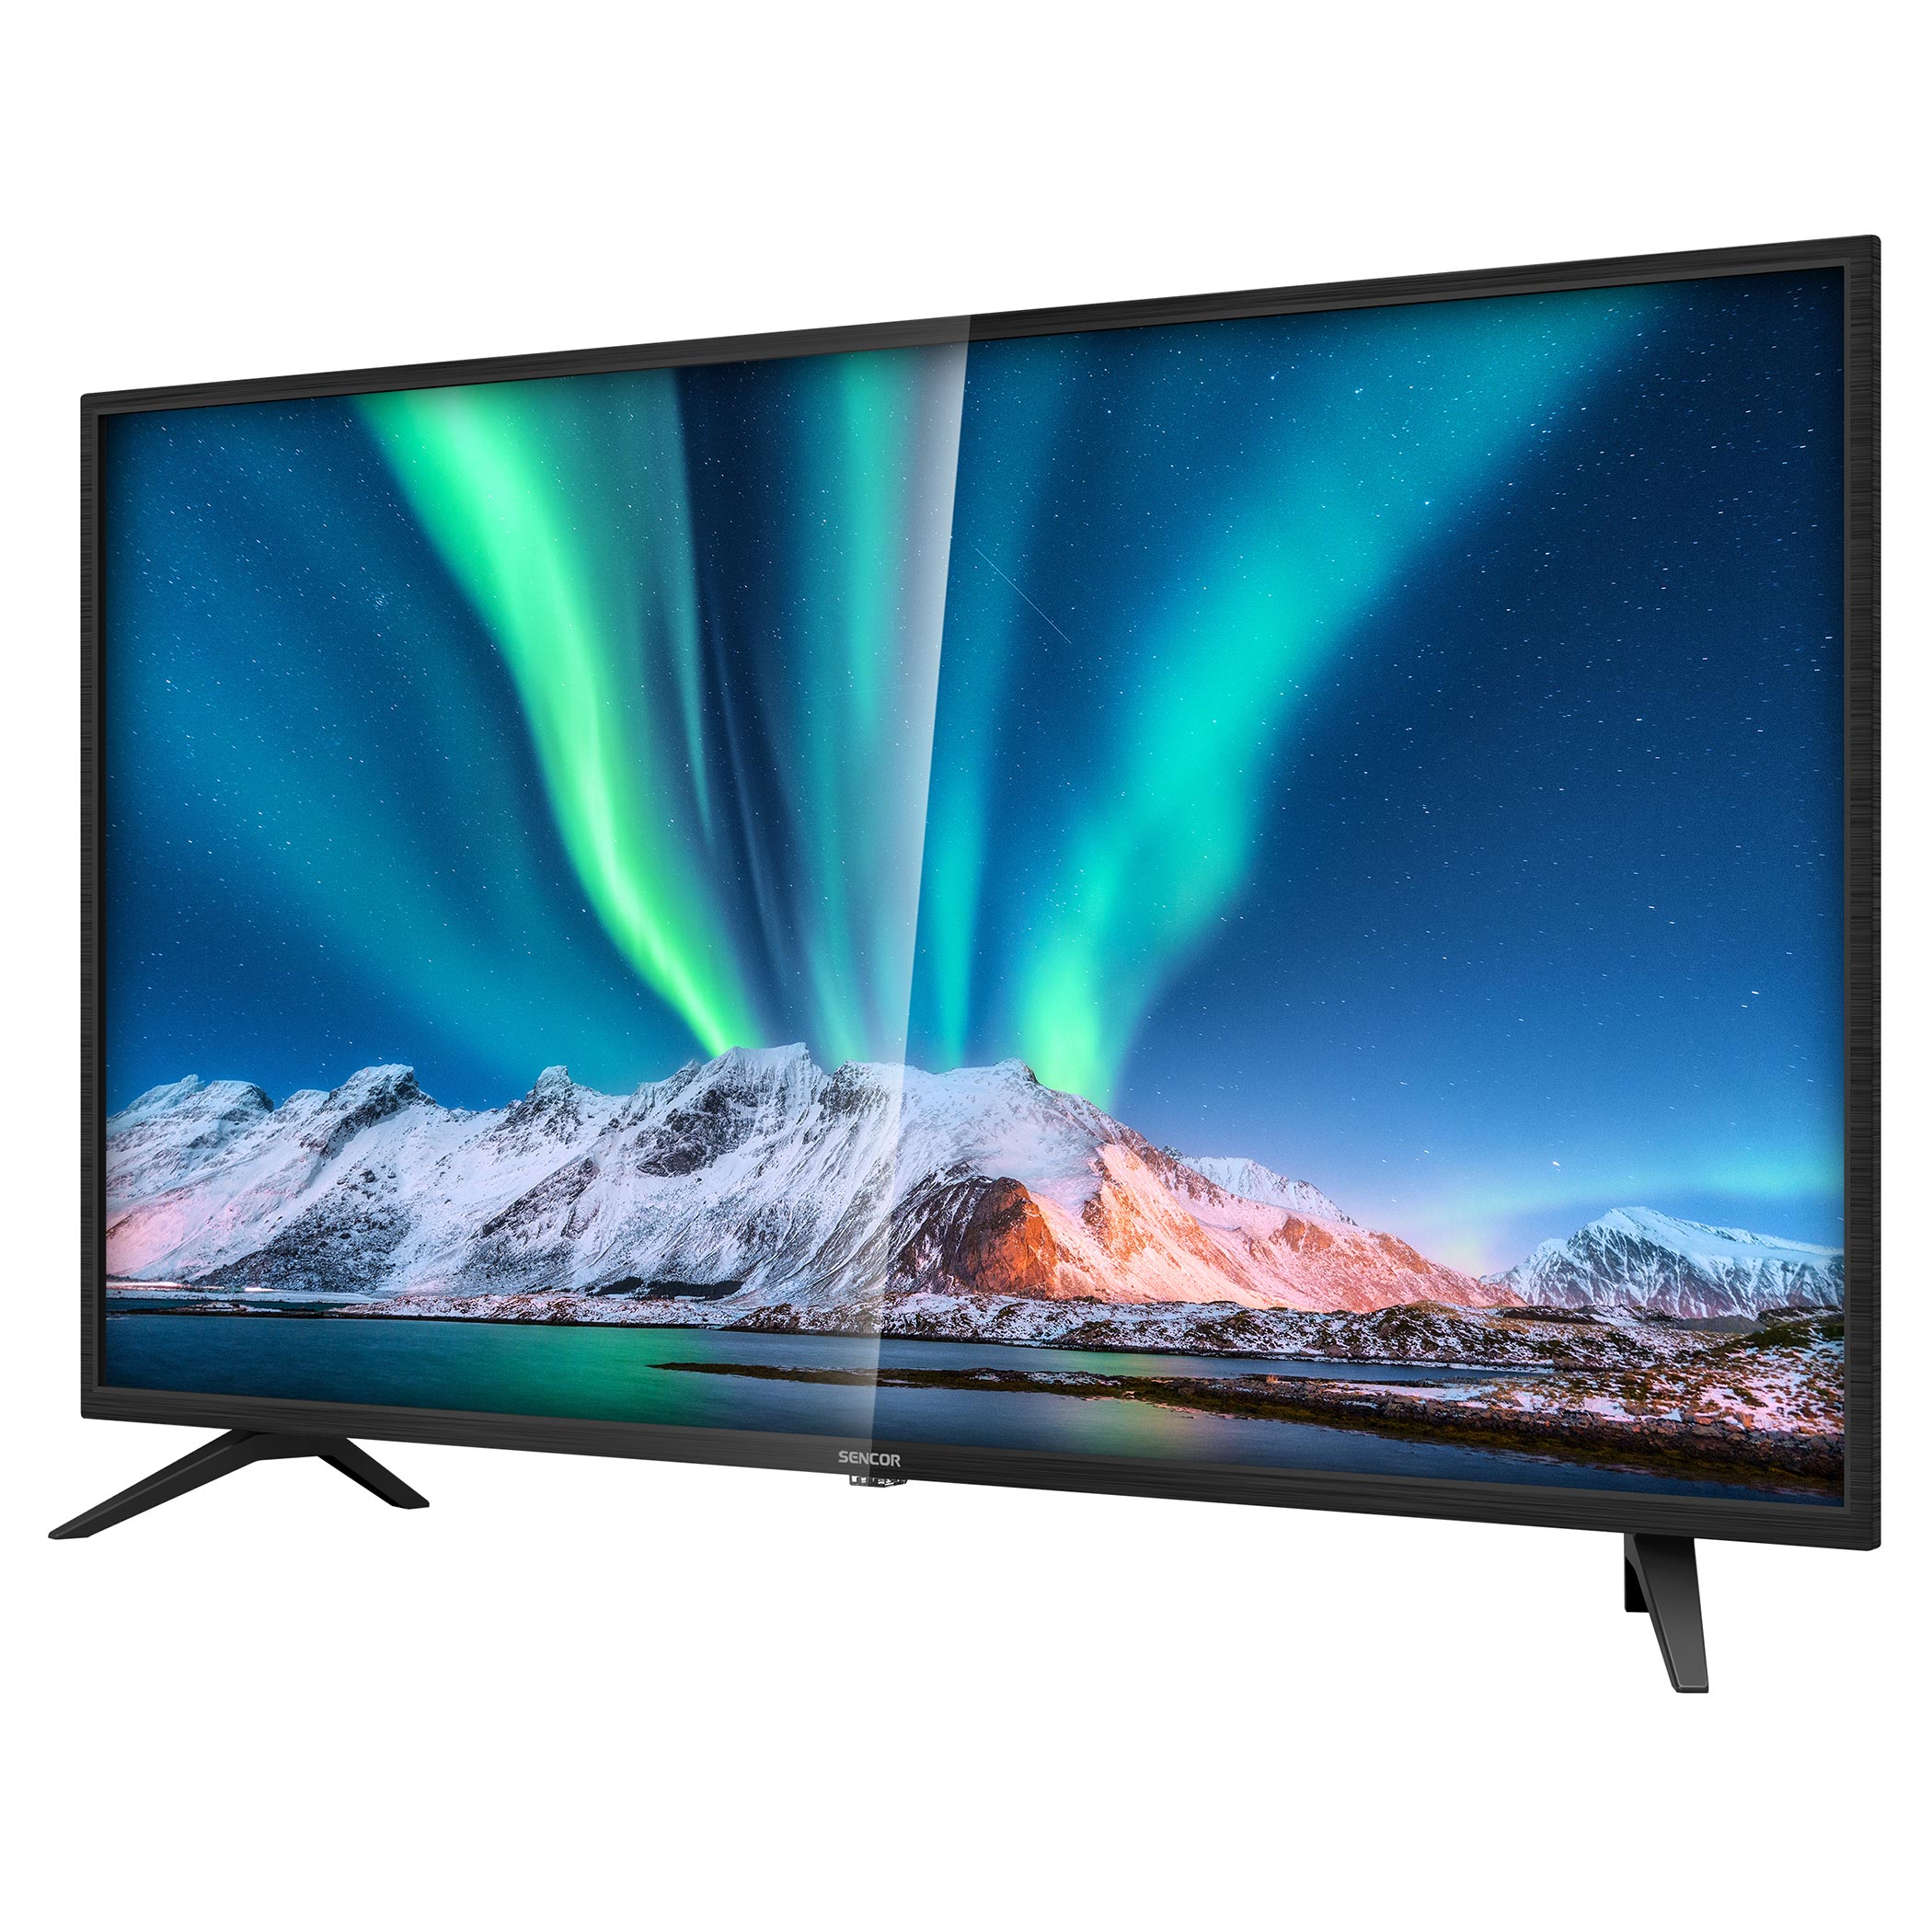 Телевизоры 107 см. Телевизор Горизонт 107. Smart Panel Samsung. Телевизор Sencor sle 58f58tcs 58" (2017). Led TV.